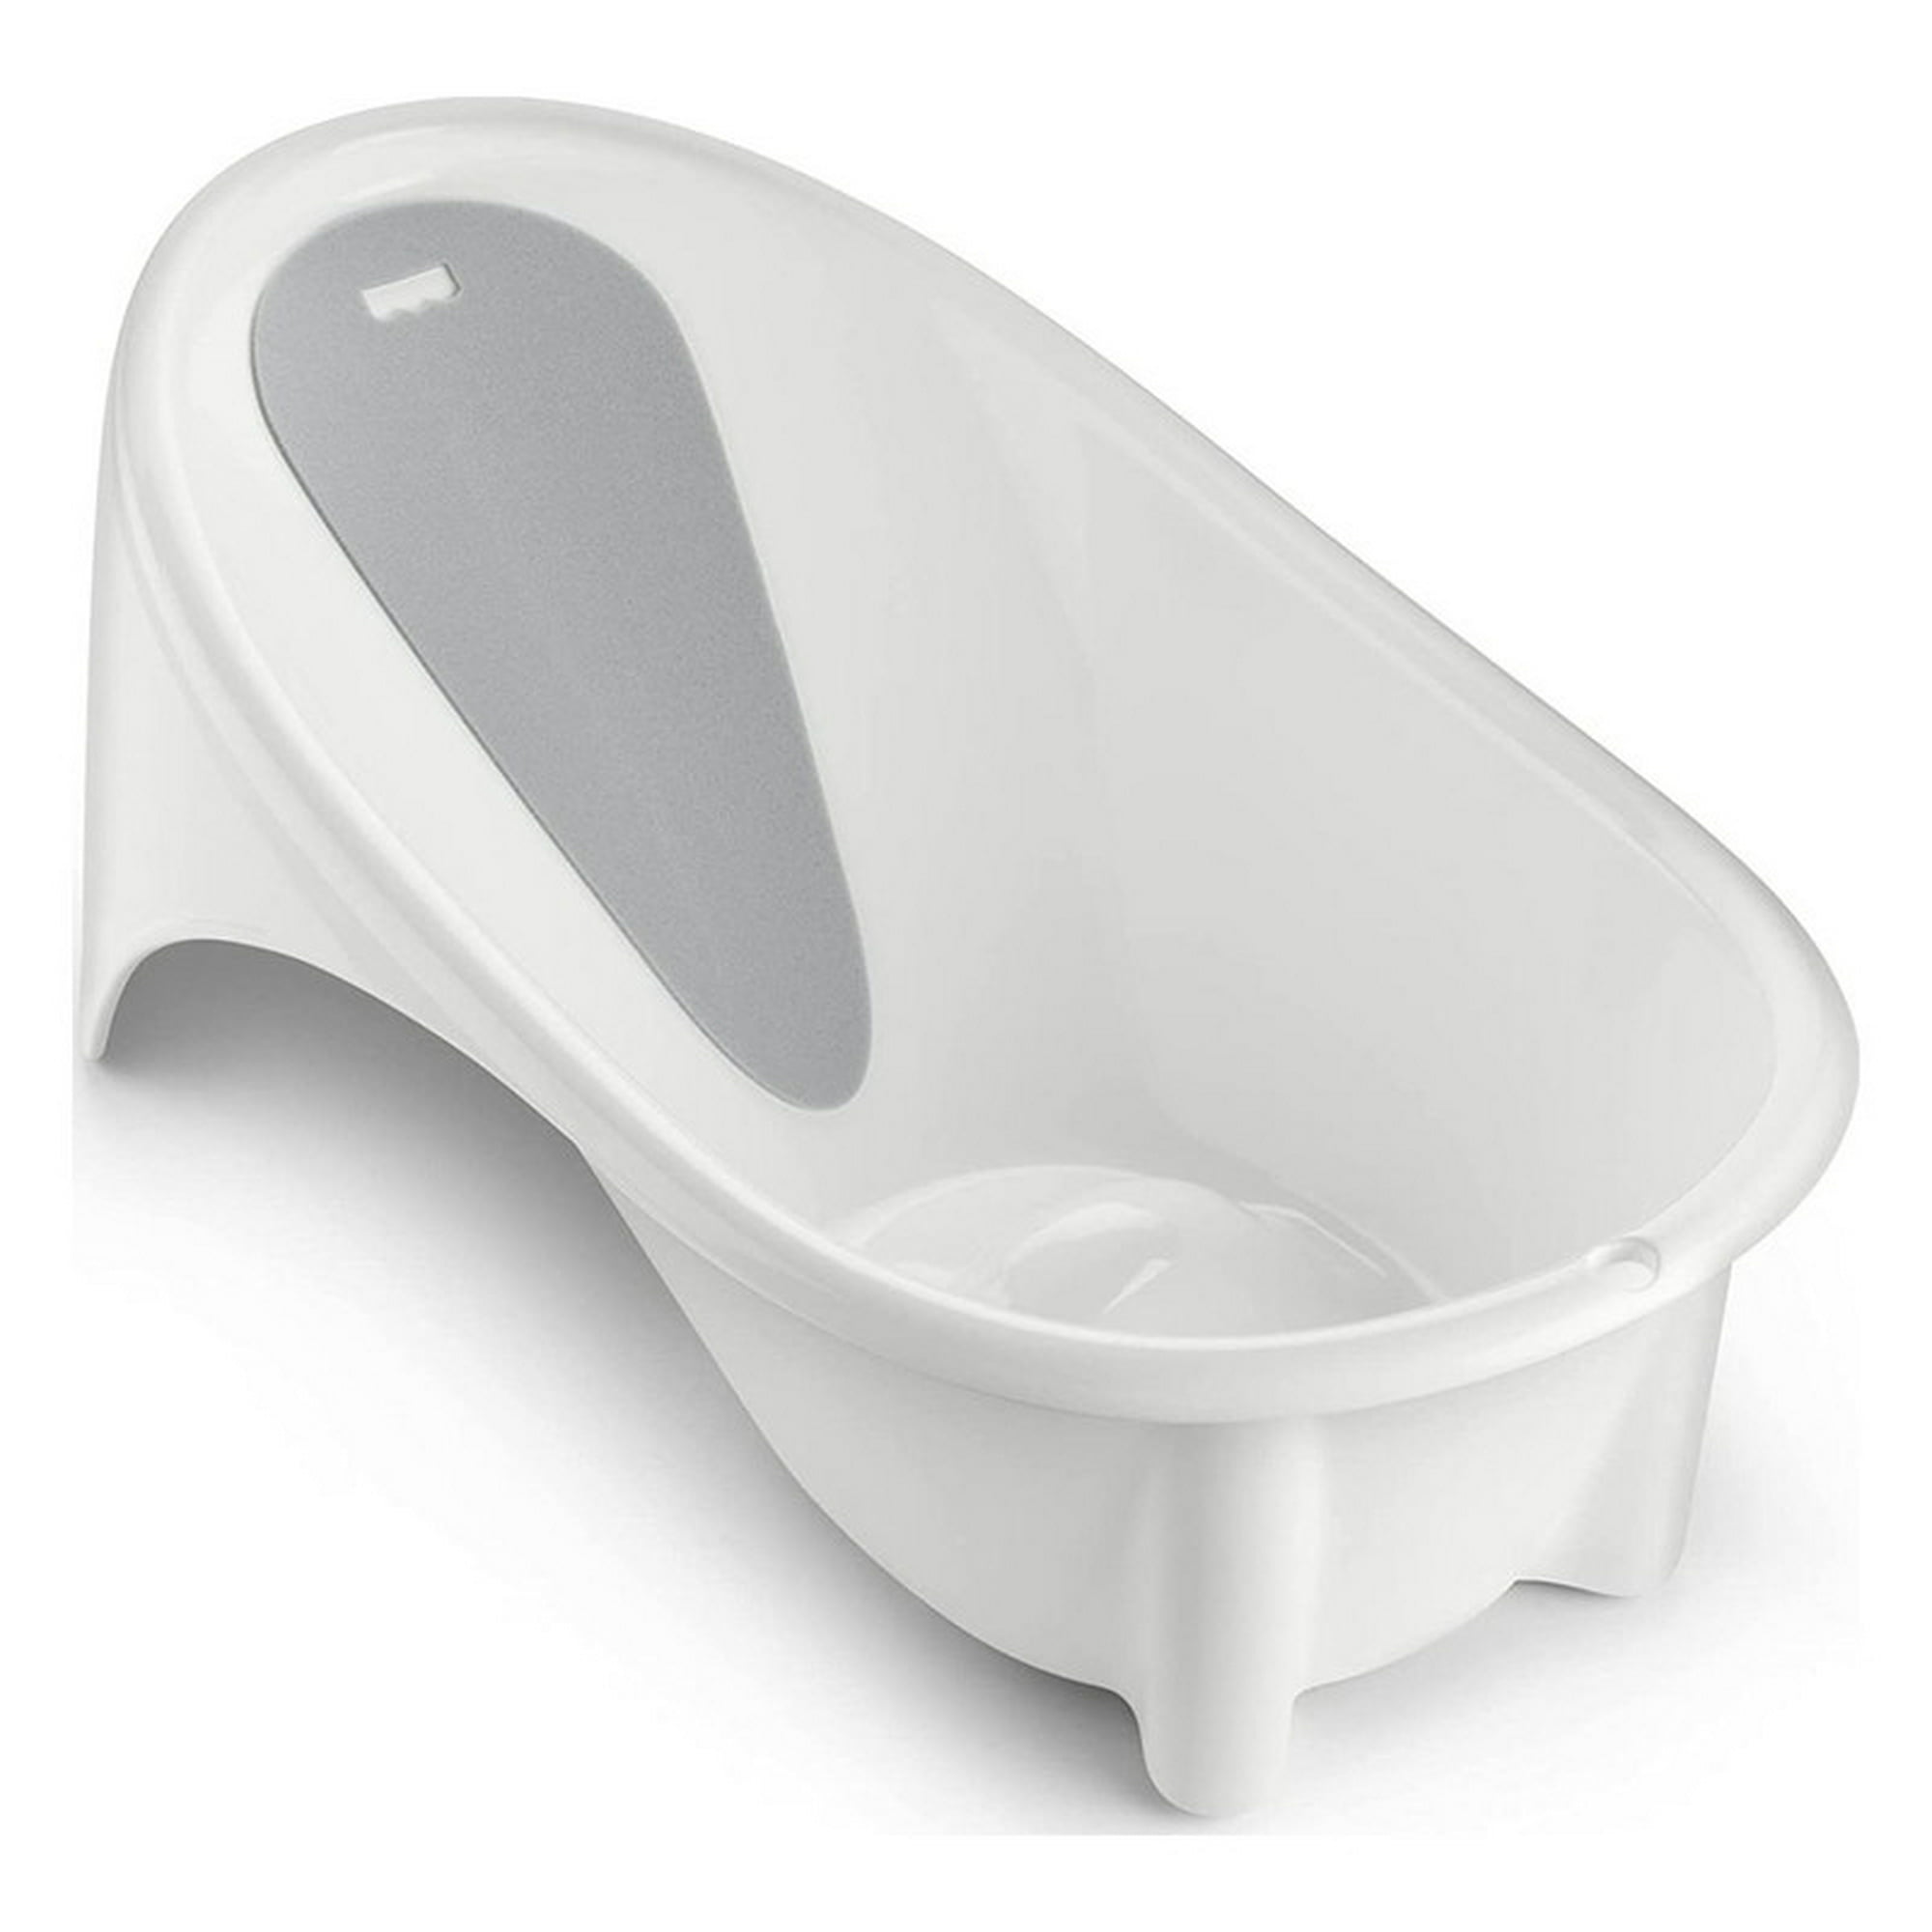 Bañera infble, bañera portátil para adultos y , casa, baño caliente / baño  de , bañera plegable independiente con reposabrazos con Baoblaze Bañera  inflable